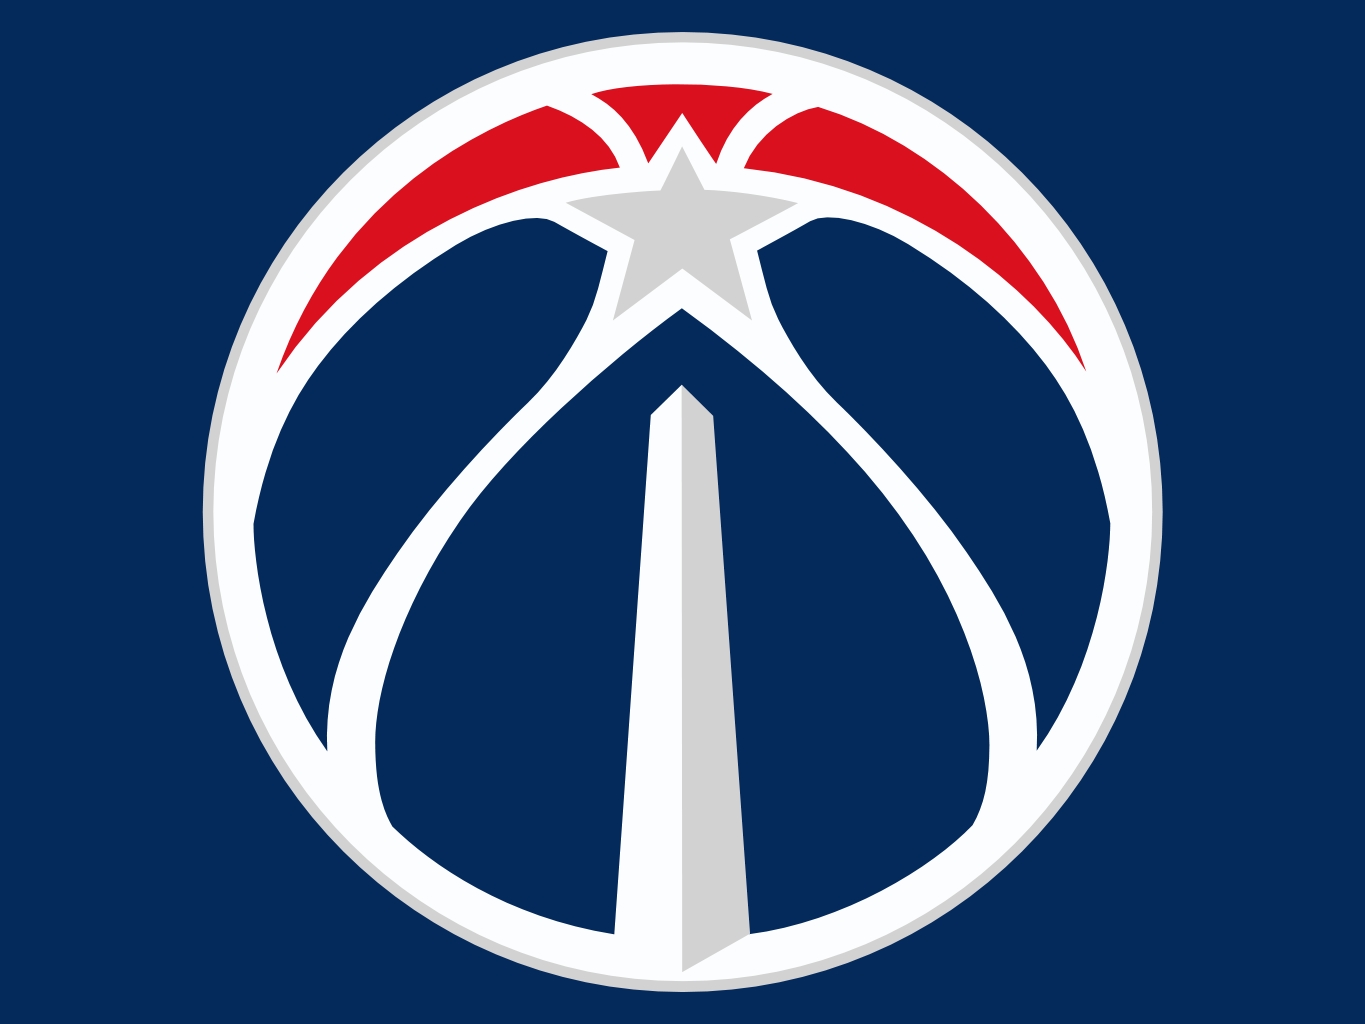 Washington Wizards symbol